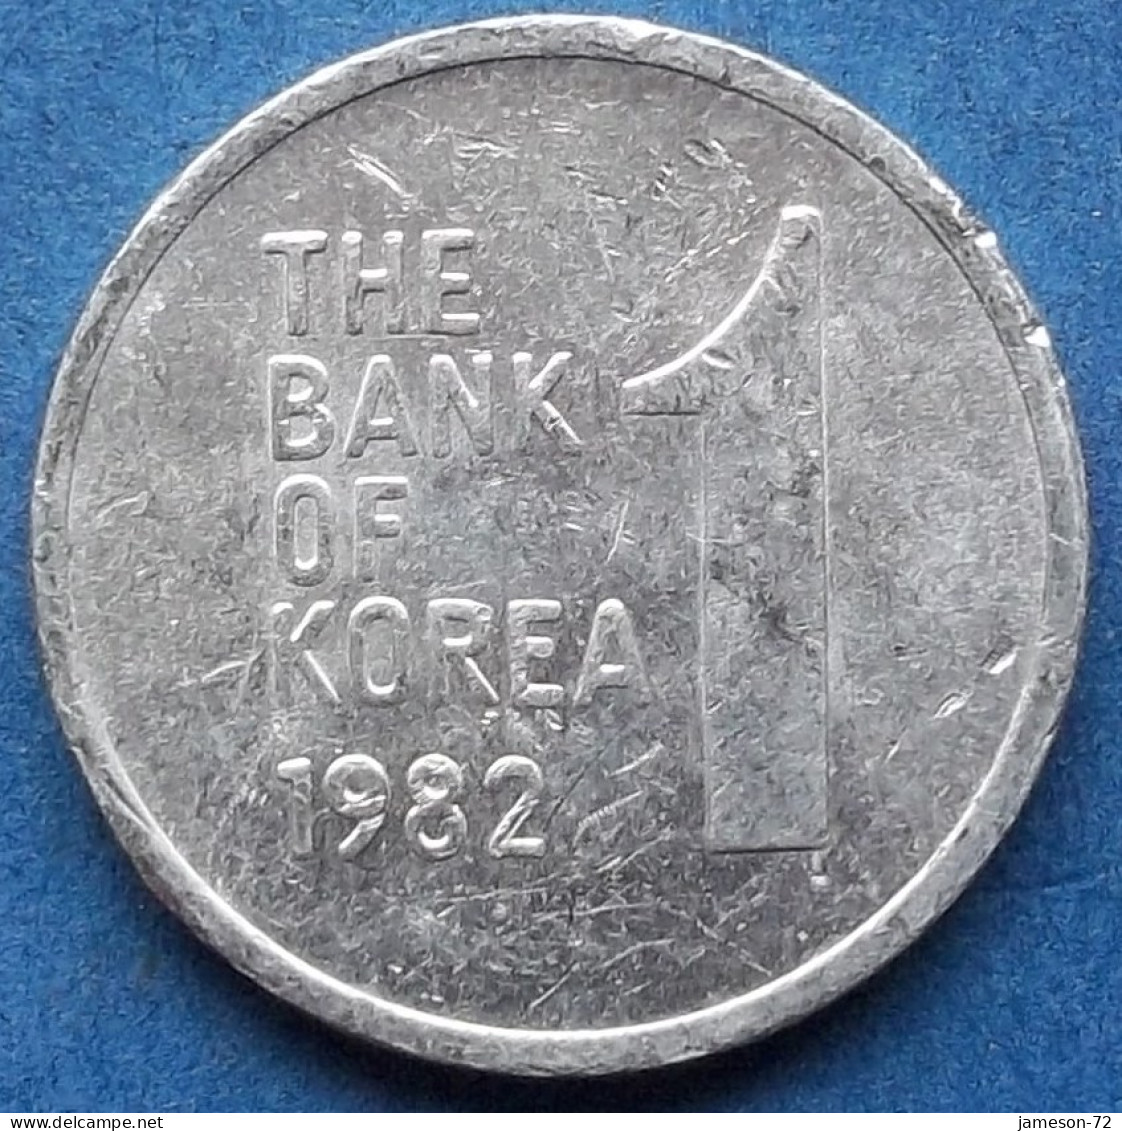 SOUTH KOREA - 1 Won 1982 "Rose Of Sharon" KM# 4a Monetary Reform (1966) - Edelweiss Coins - Korea (Süd-)